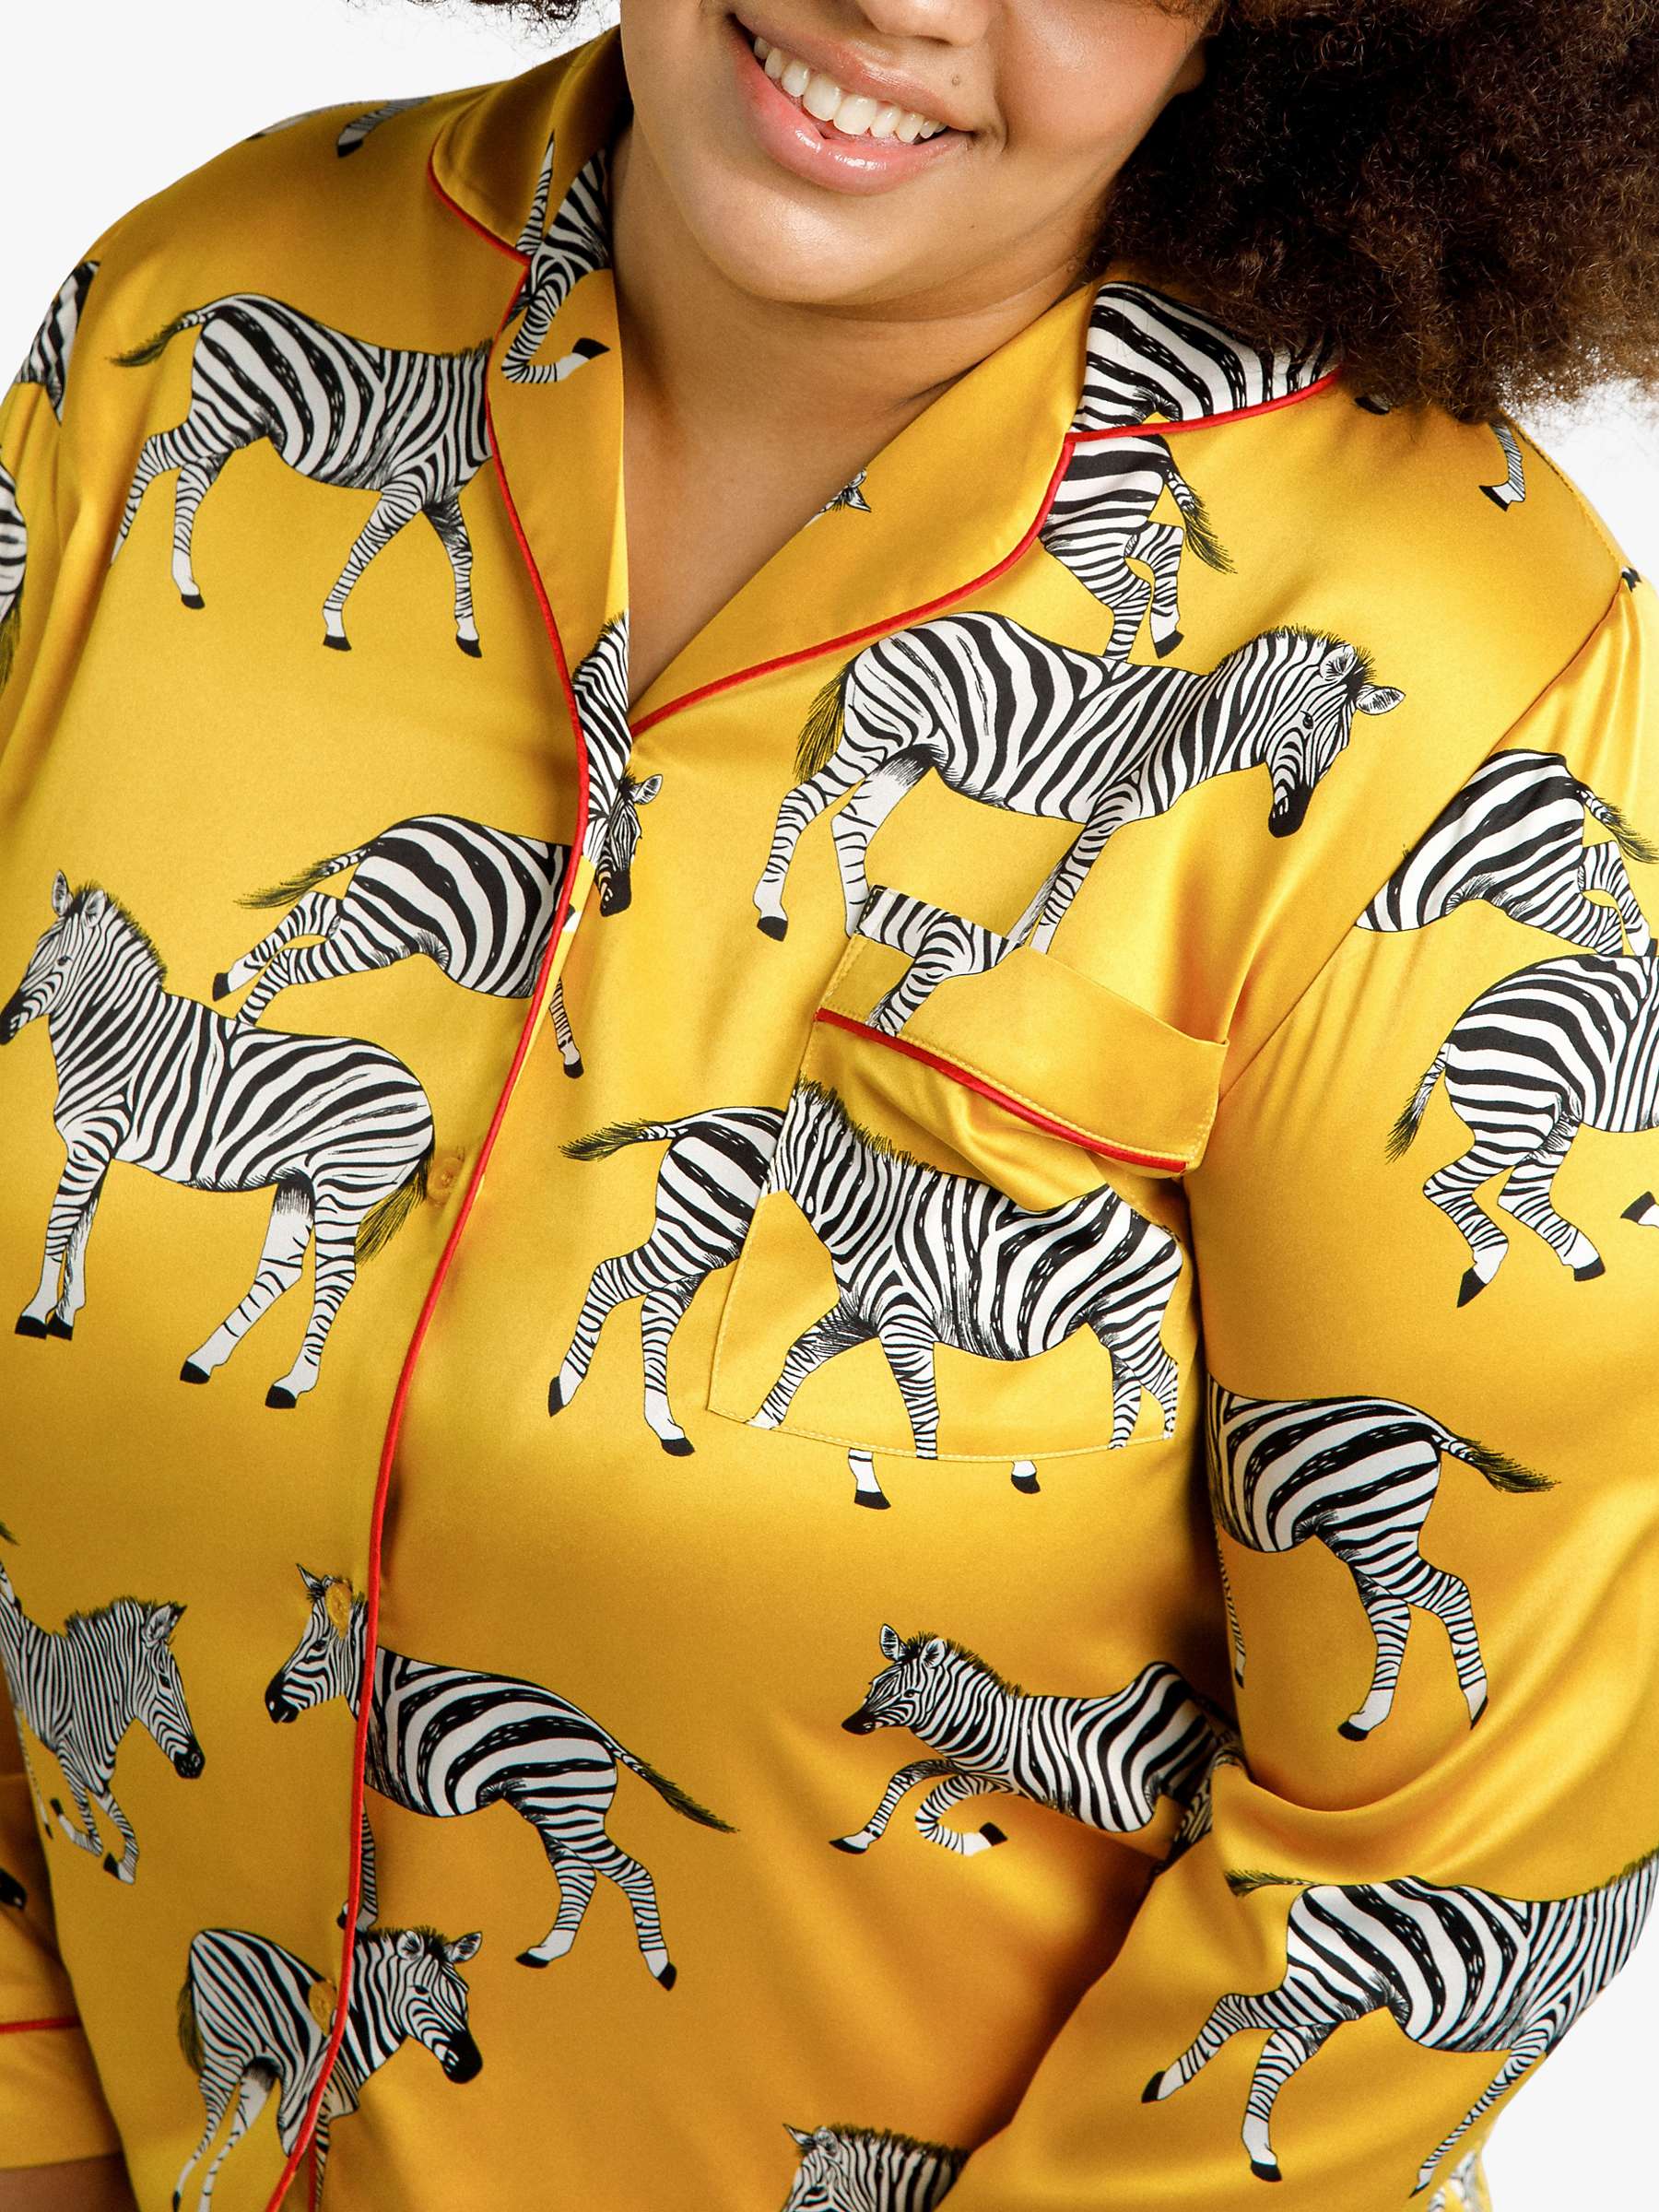 Buy Chelsea Peers Curve Zebra Print Satin Pyjamas Online at johnlewis.com